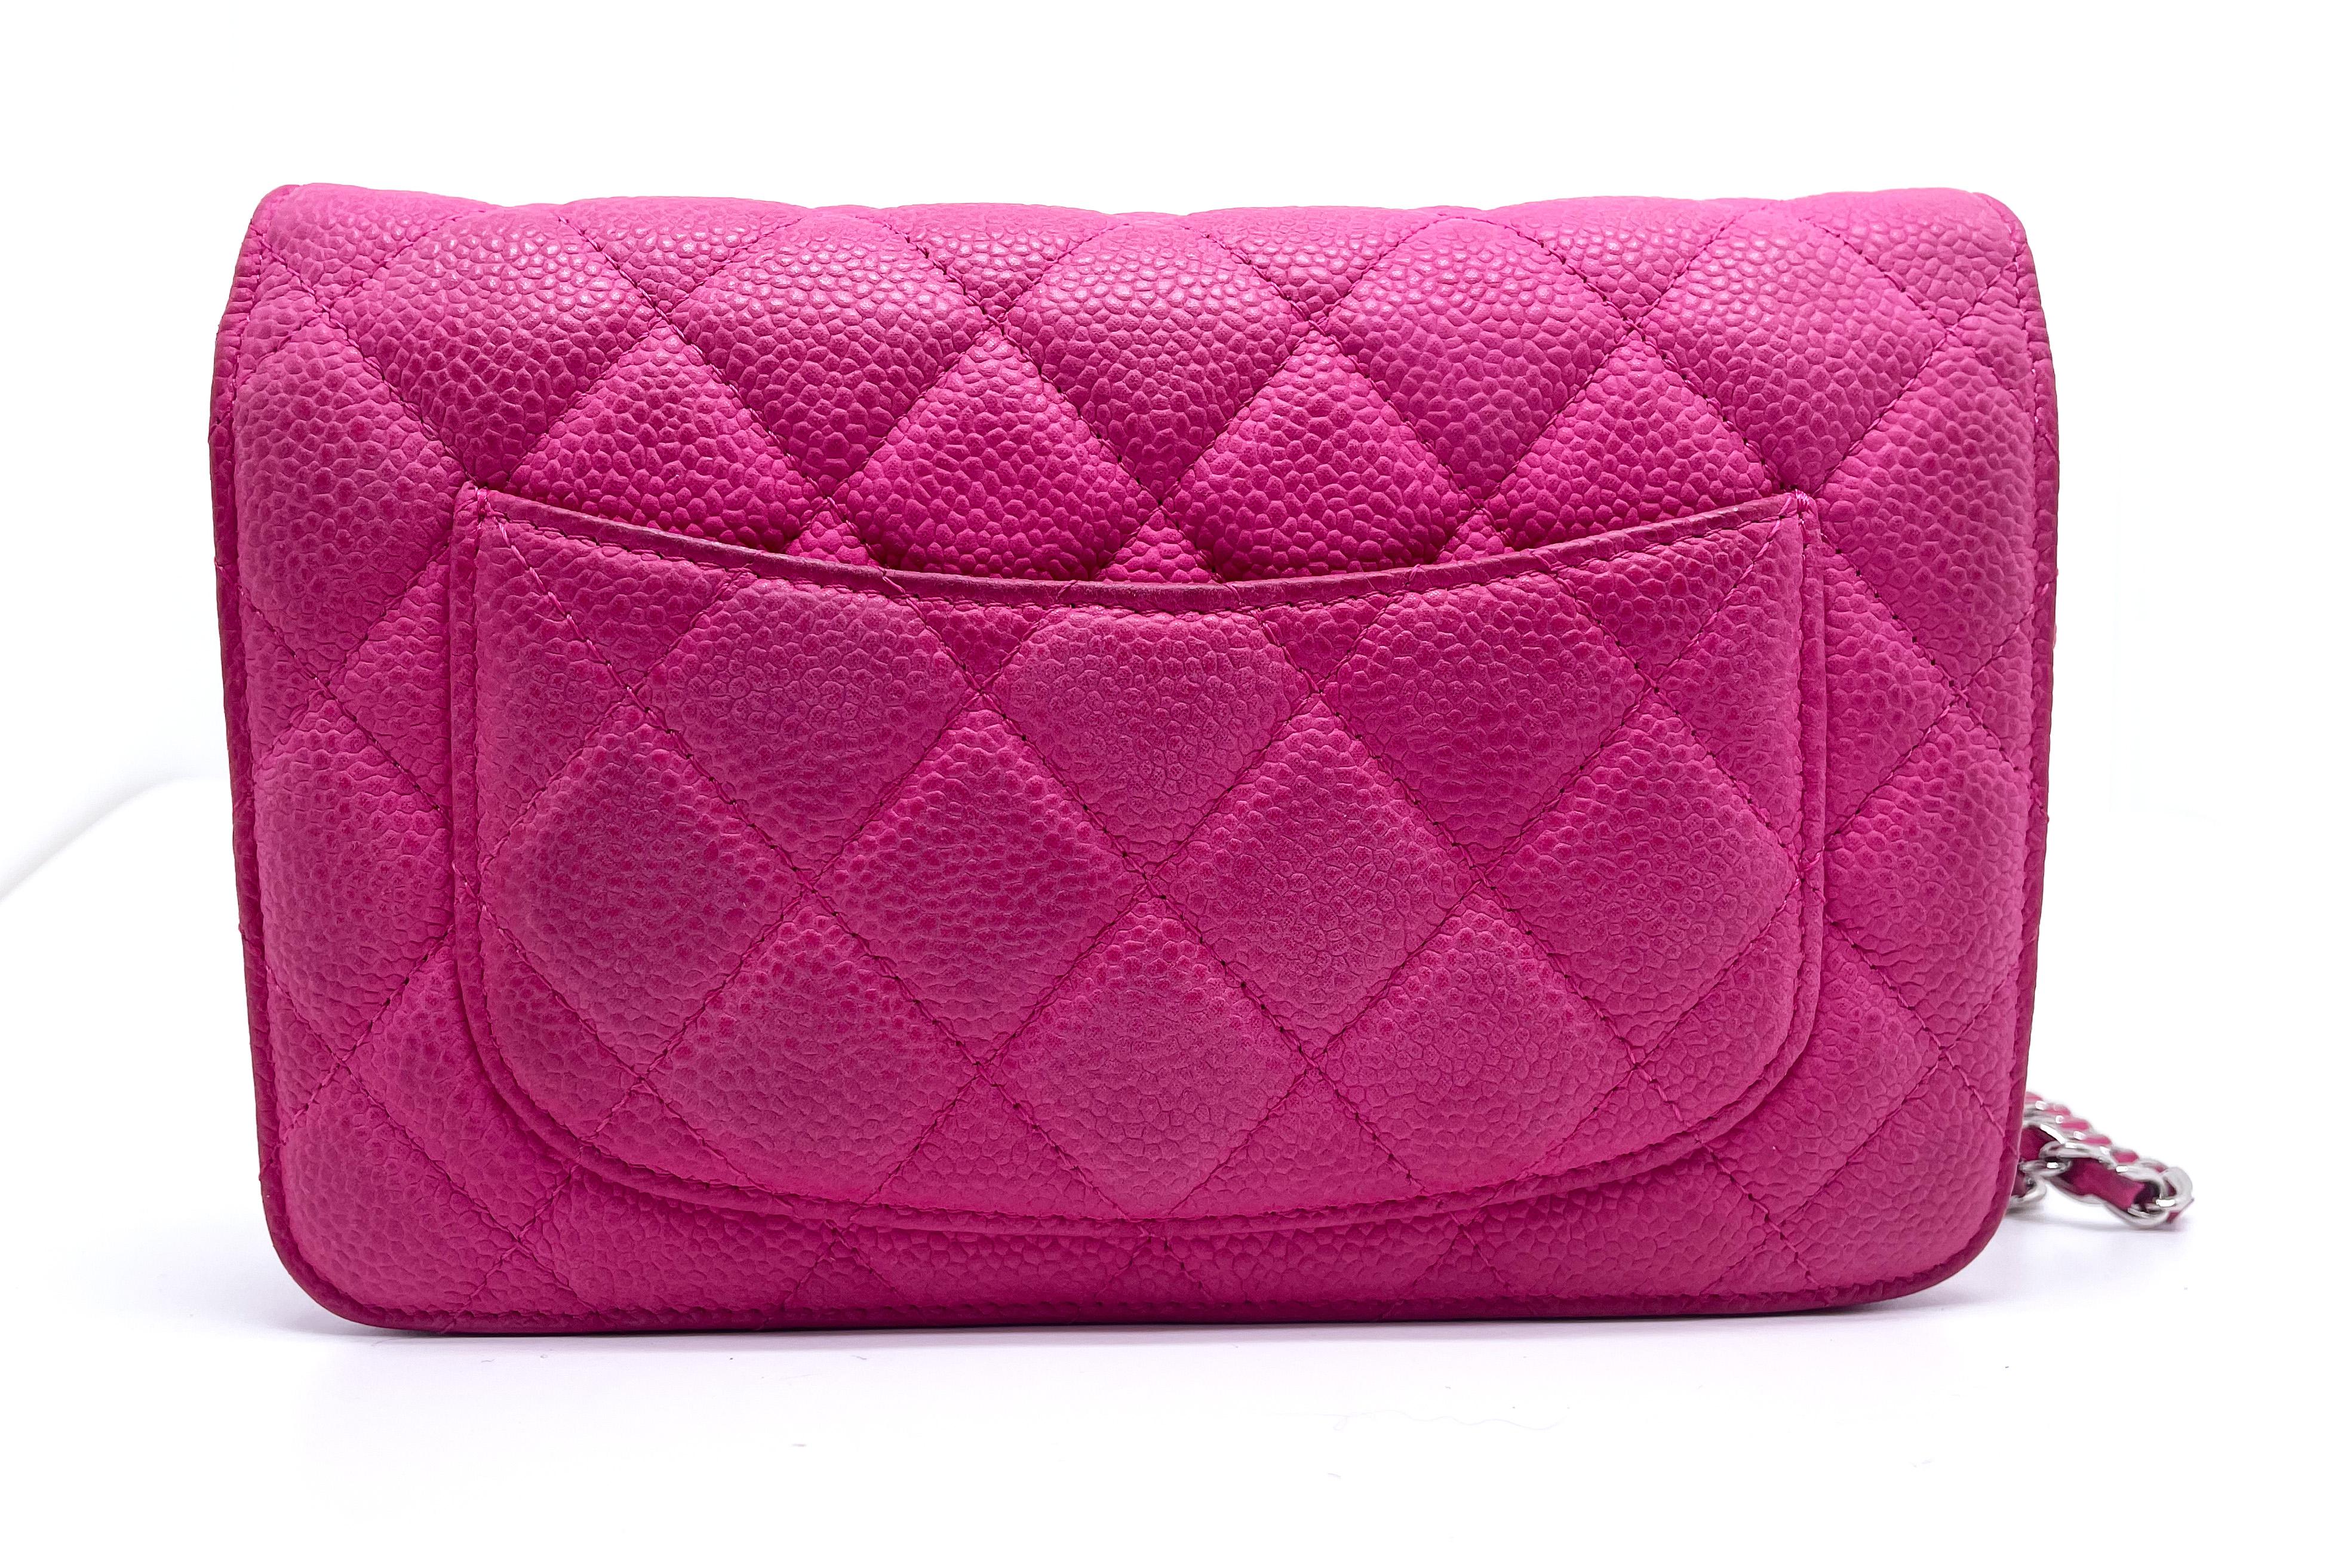 Women's or Men's Chanel Wallet on Chain Handbag Pink Caviar Leather